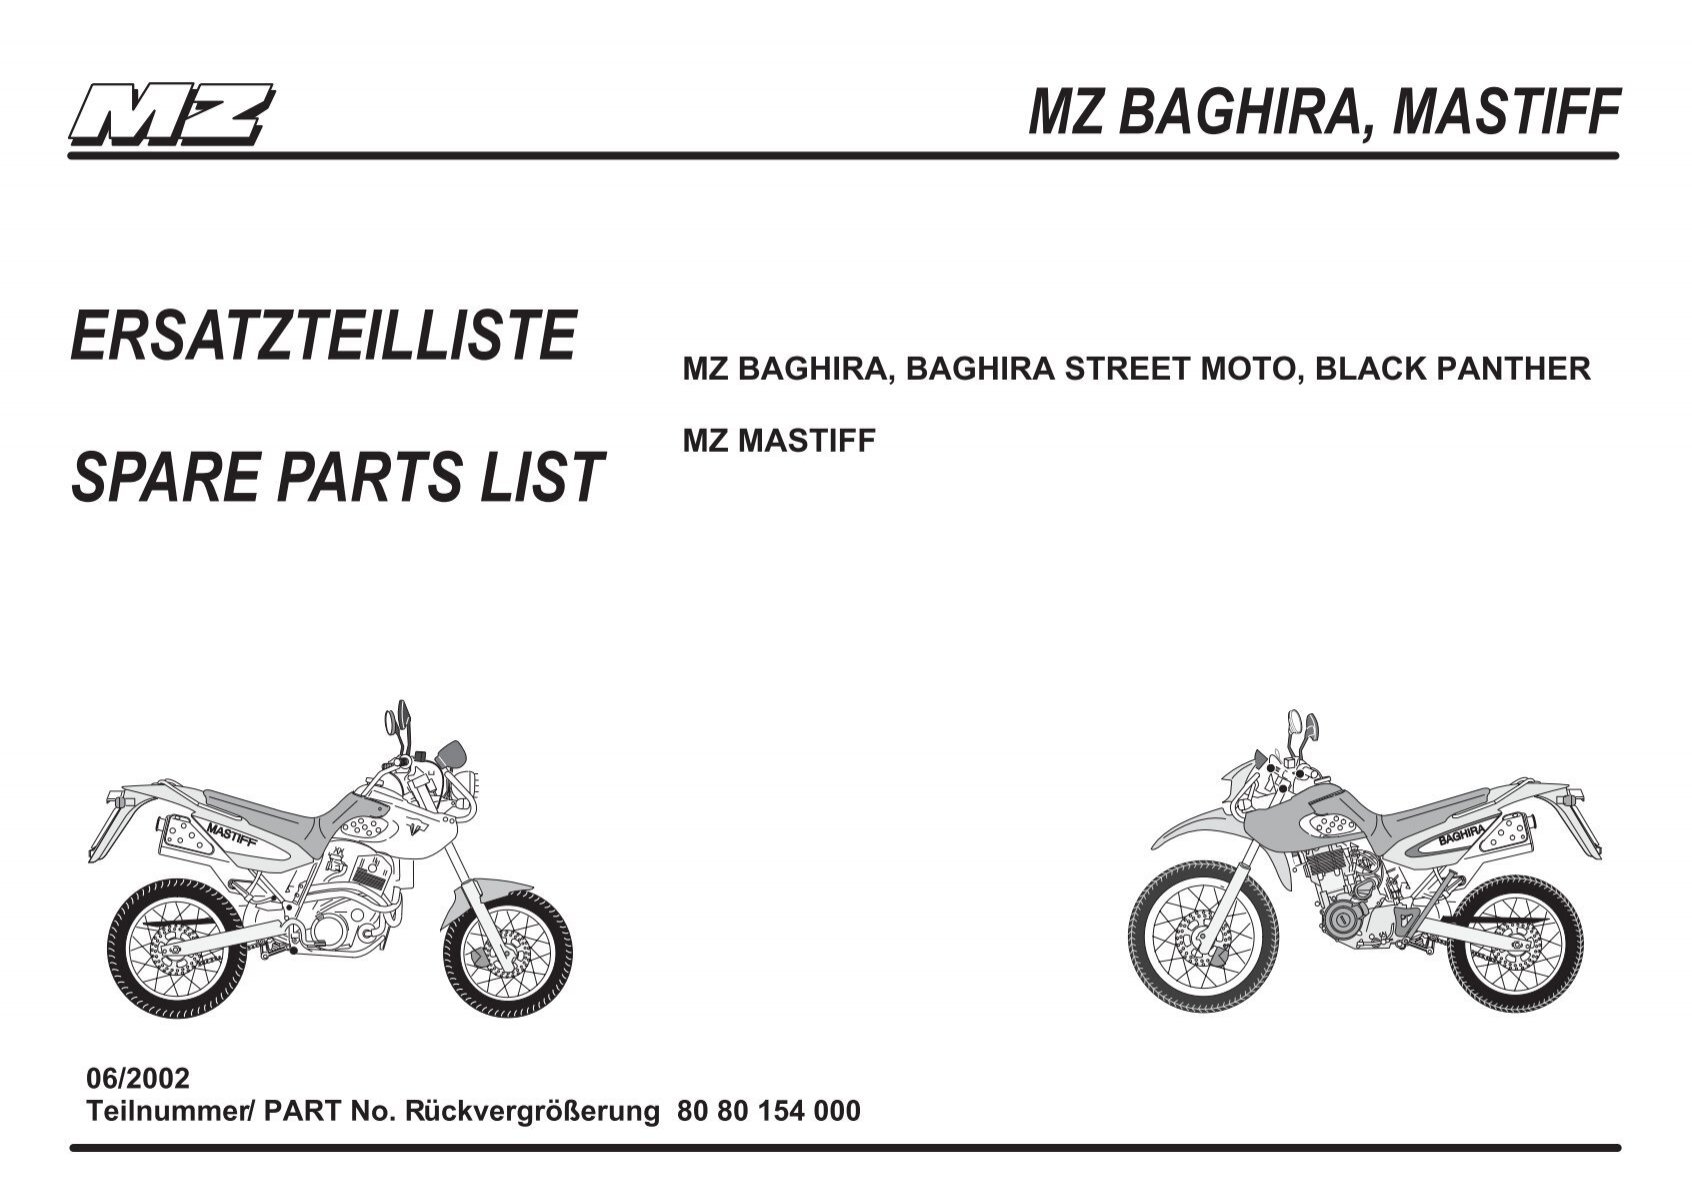 ERSATZTEILLISTE SPARE PARTS LIST - GRAHAMS Motorcycles